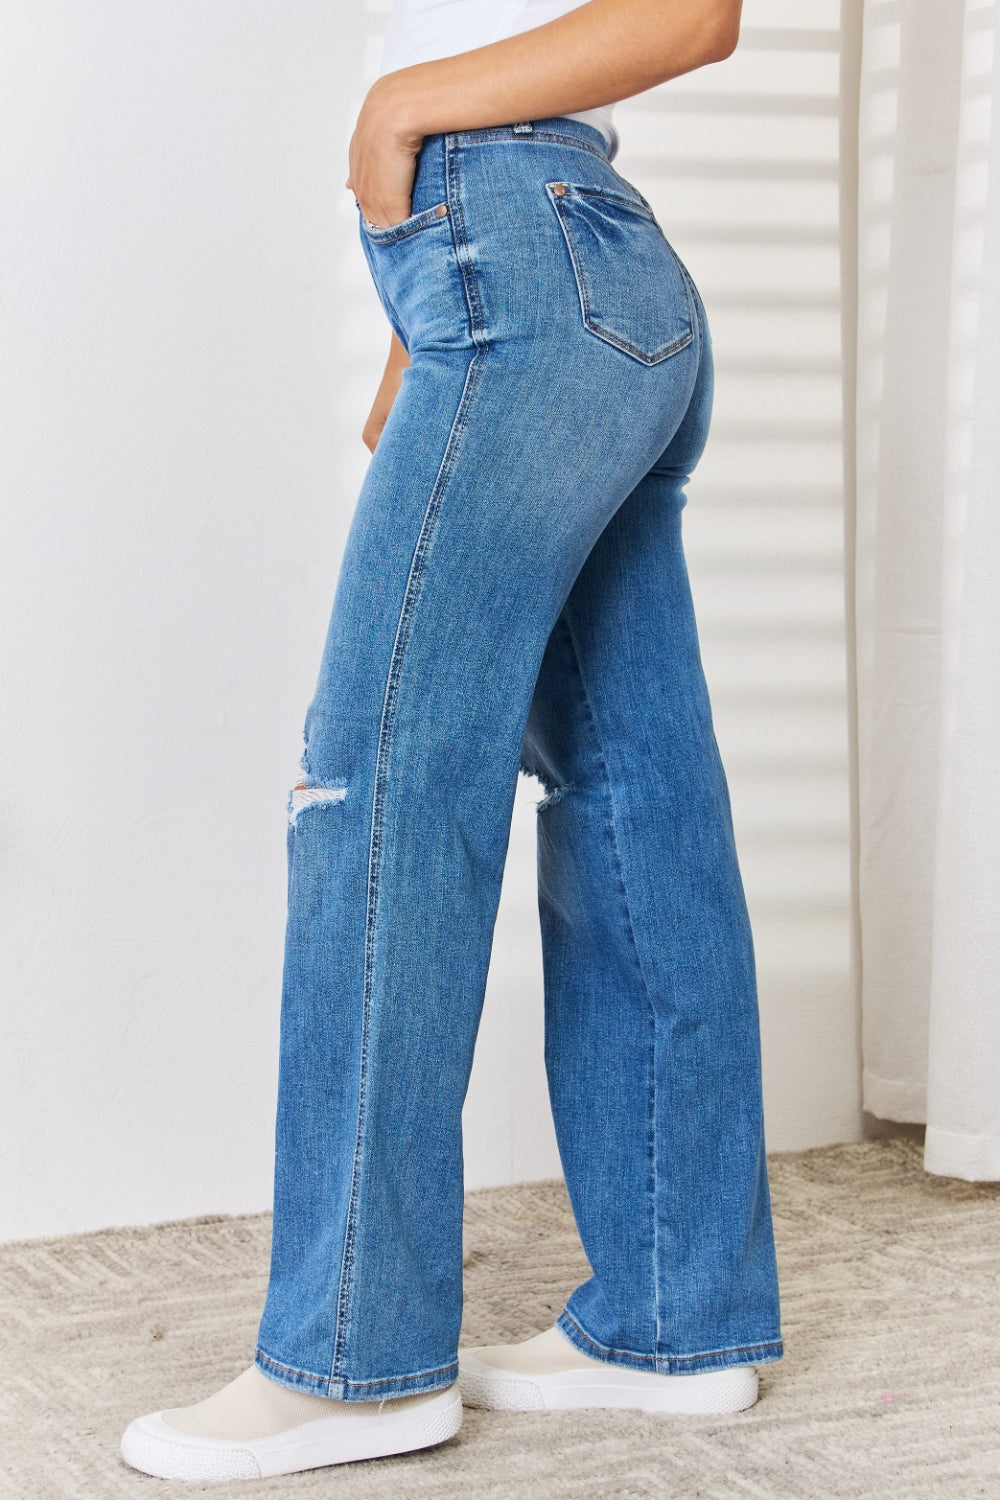 Judy Blue Full Size High Waist Distressed Straight-Leg Jeans apparel & accessories